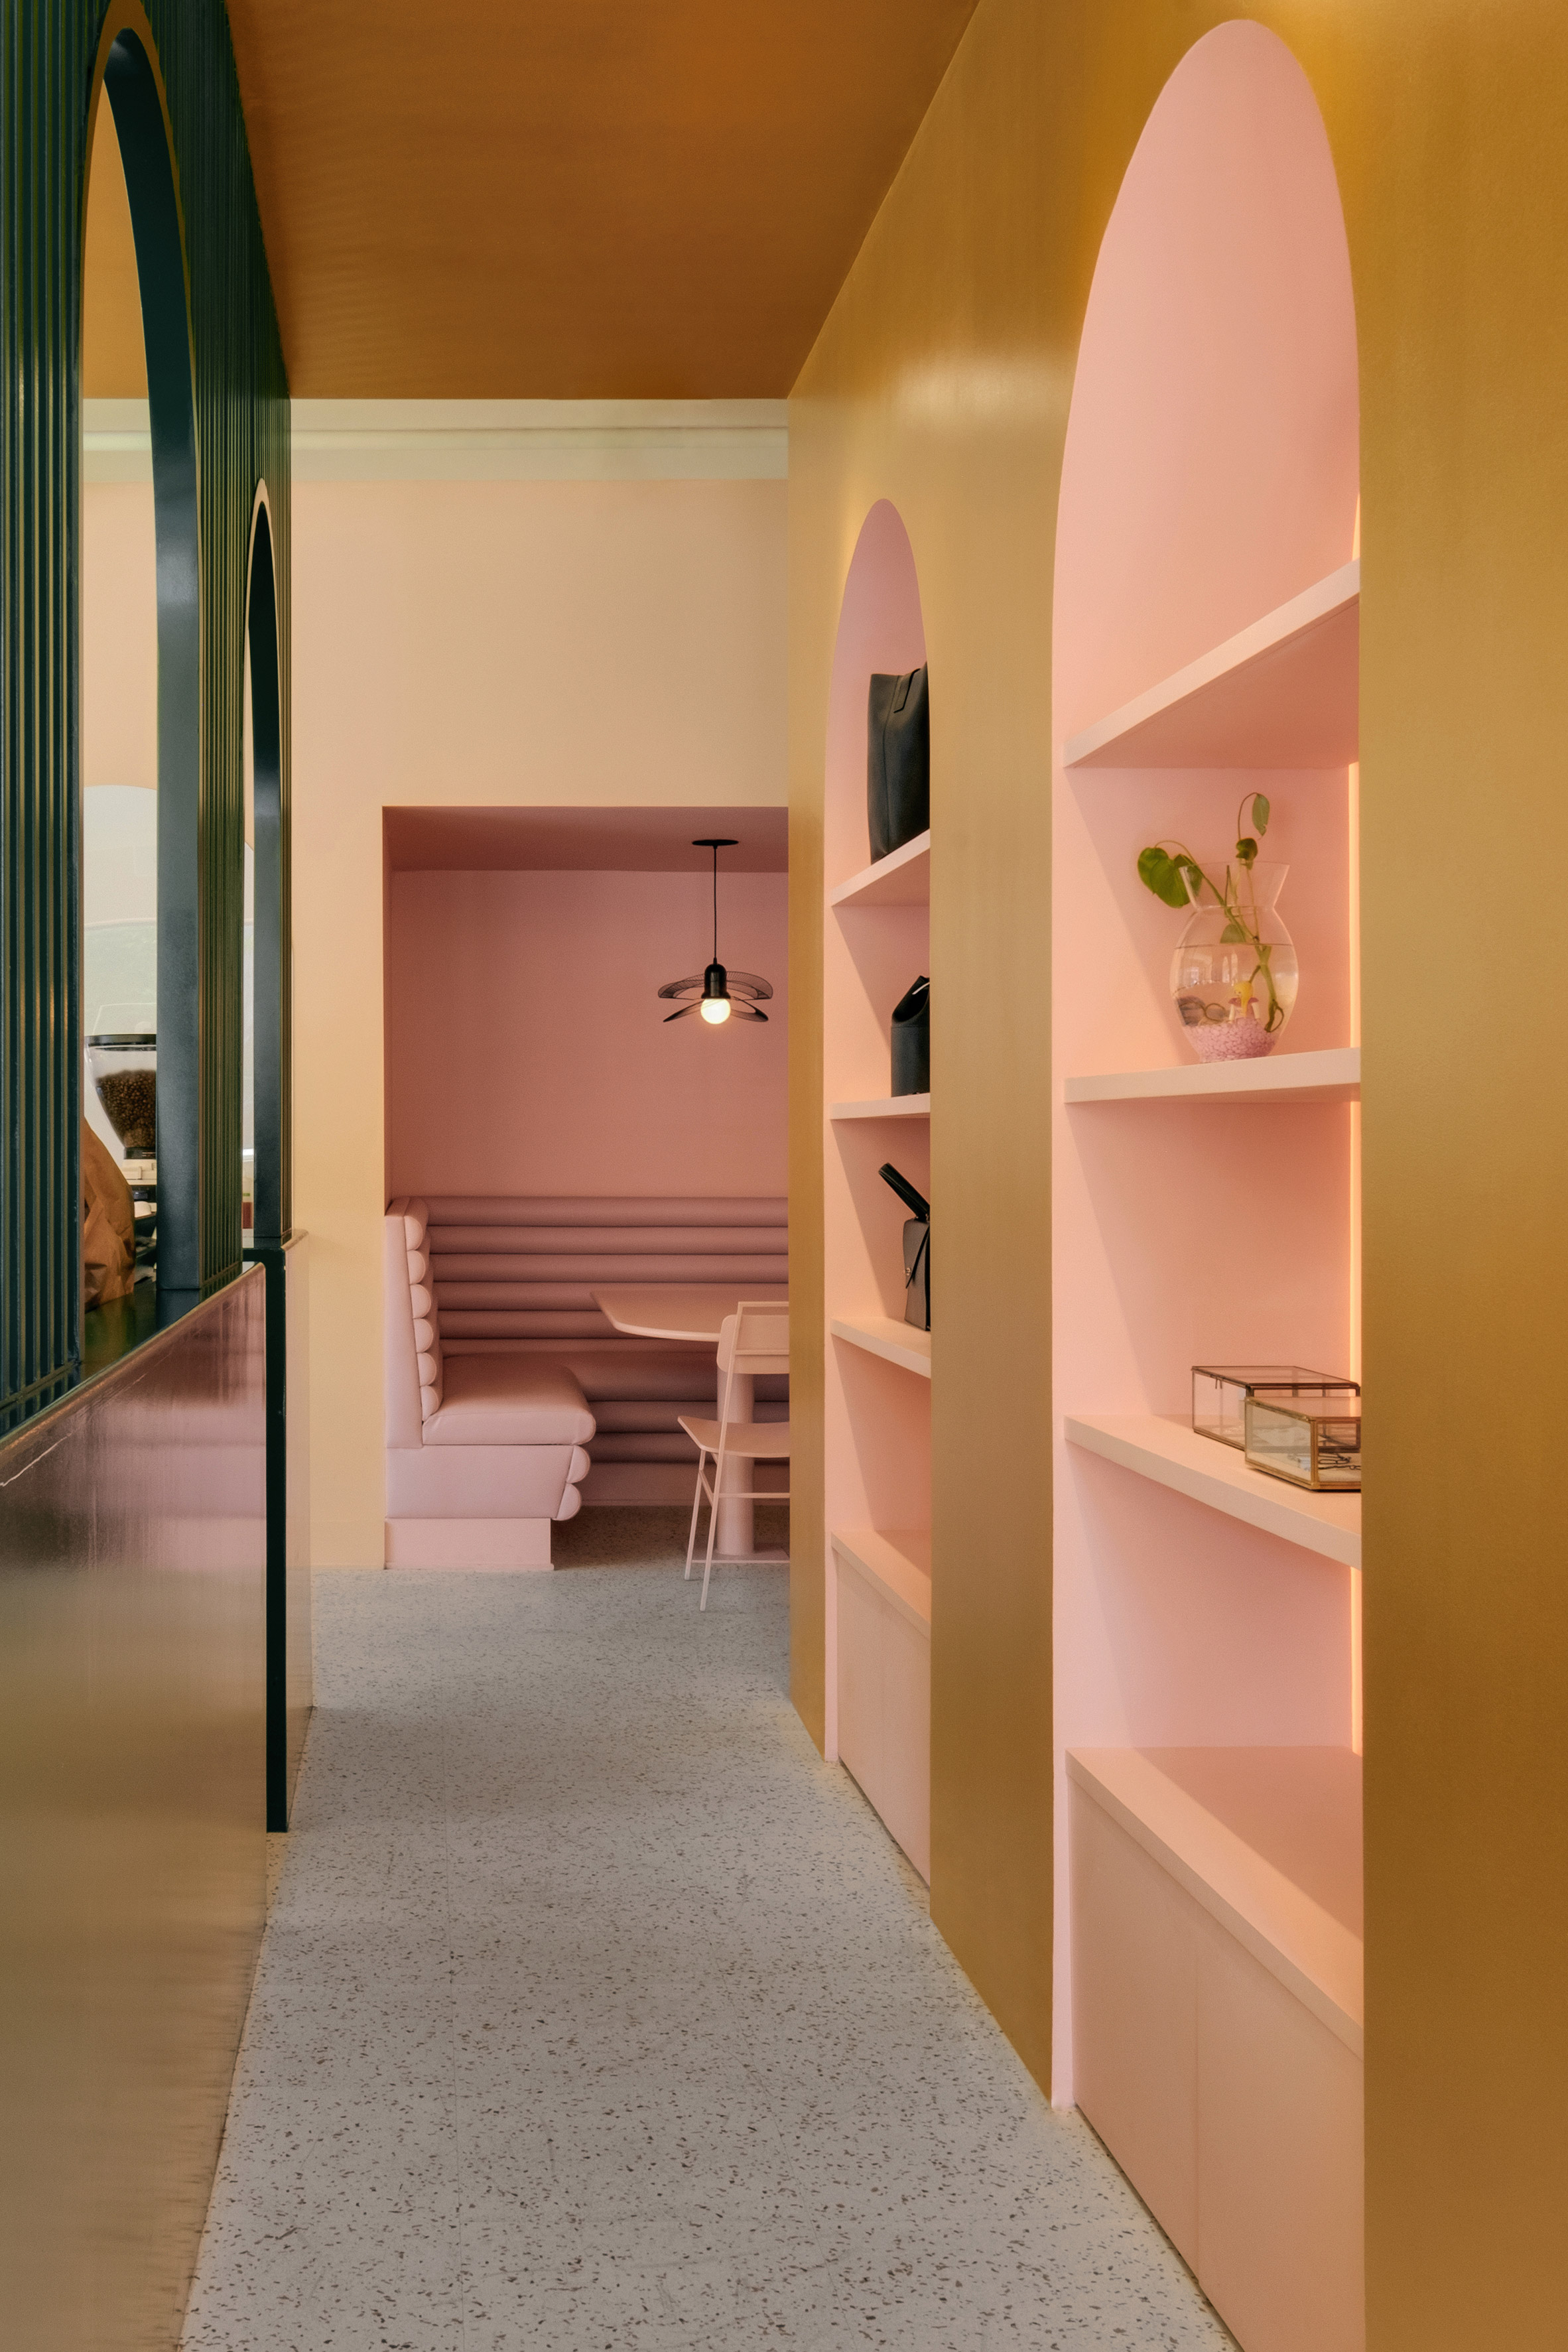 Appareil Architecture colour-codes spaces at Pastel Rita cafe in Montreal –  Dezeen